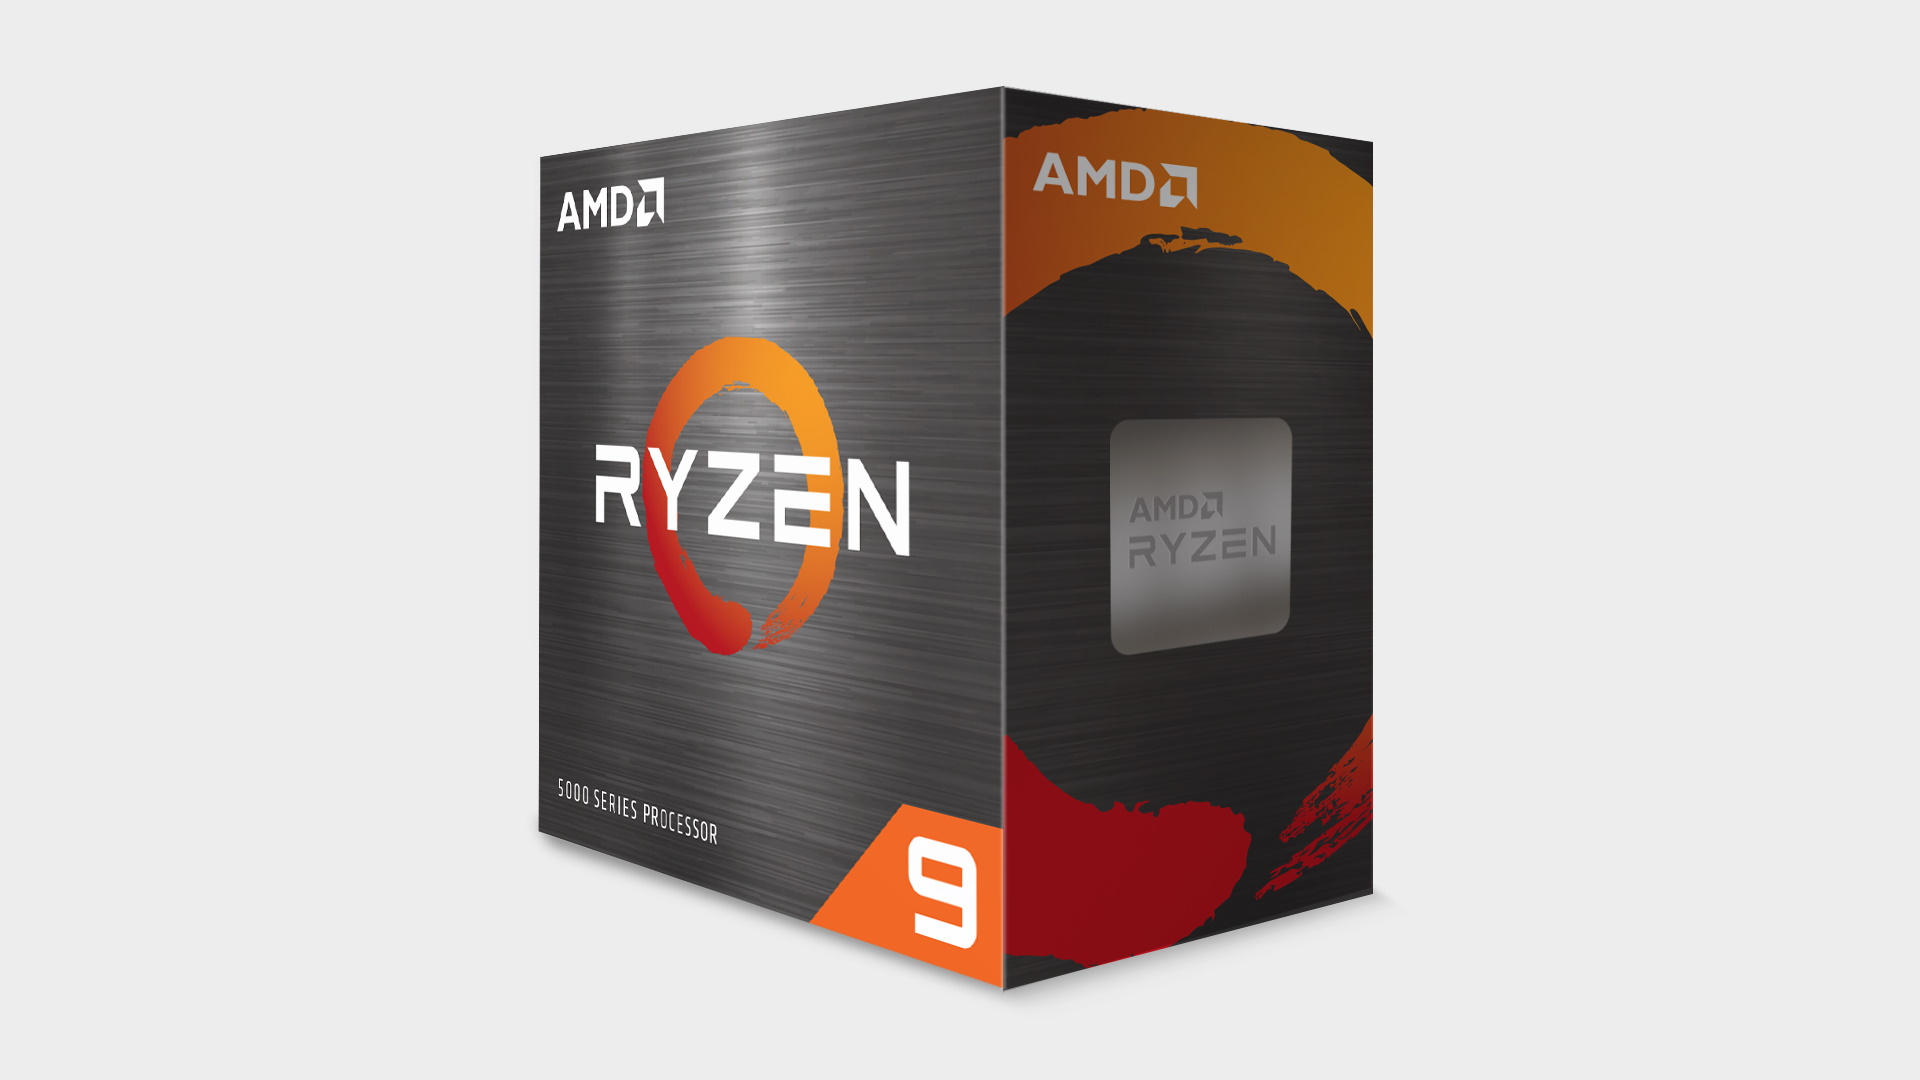 AMD Ryzen 9 5900X processor in box on grey